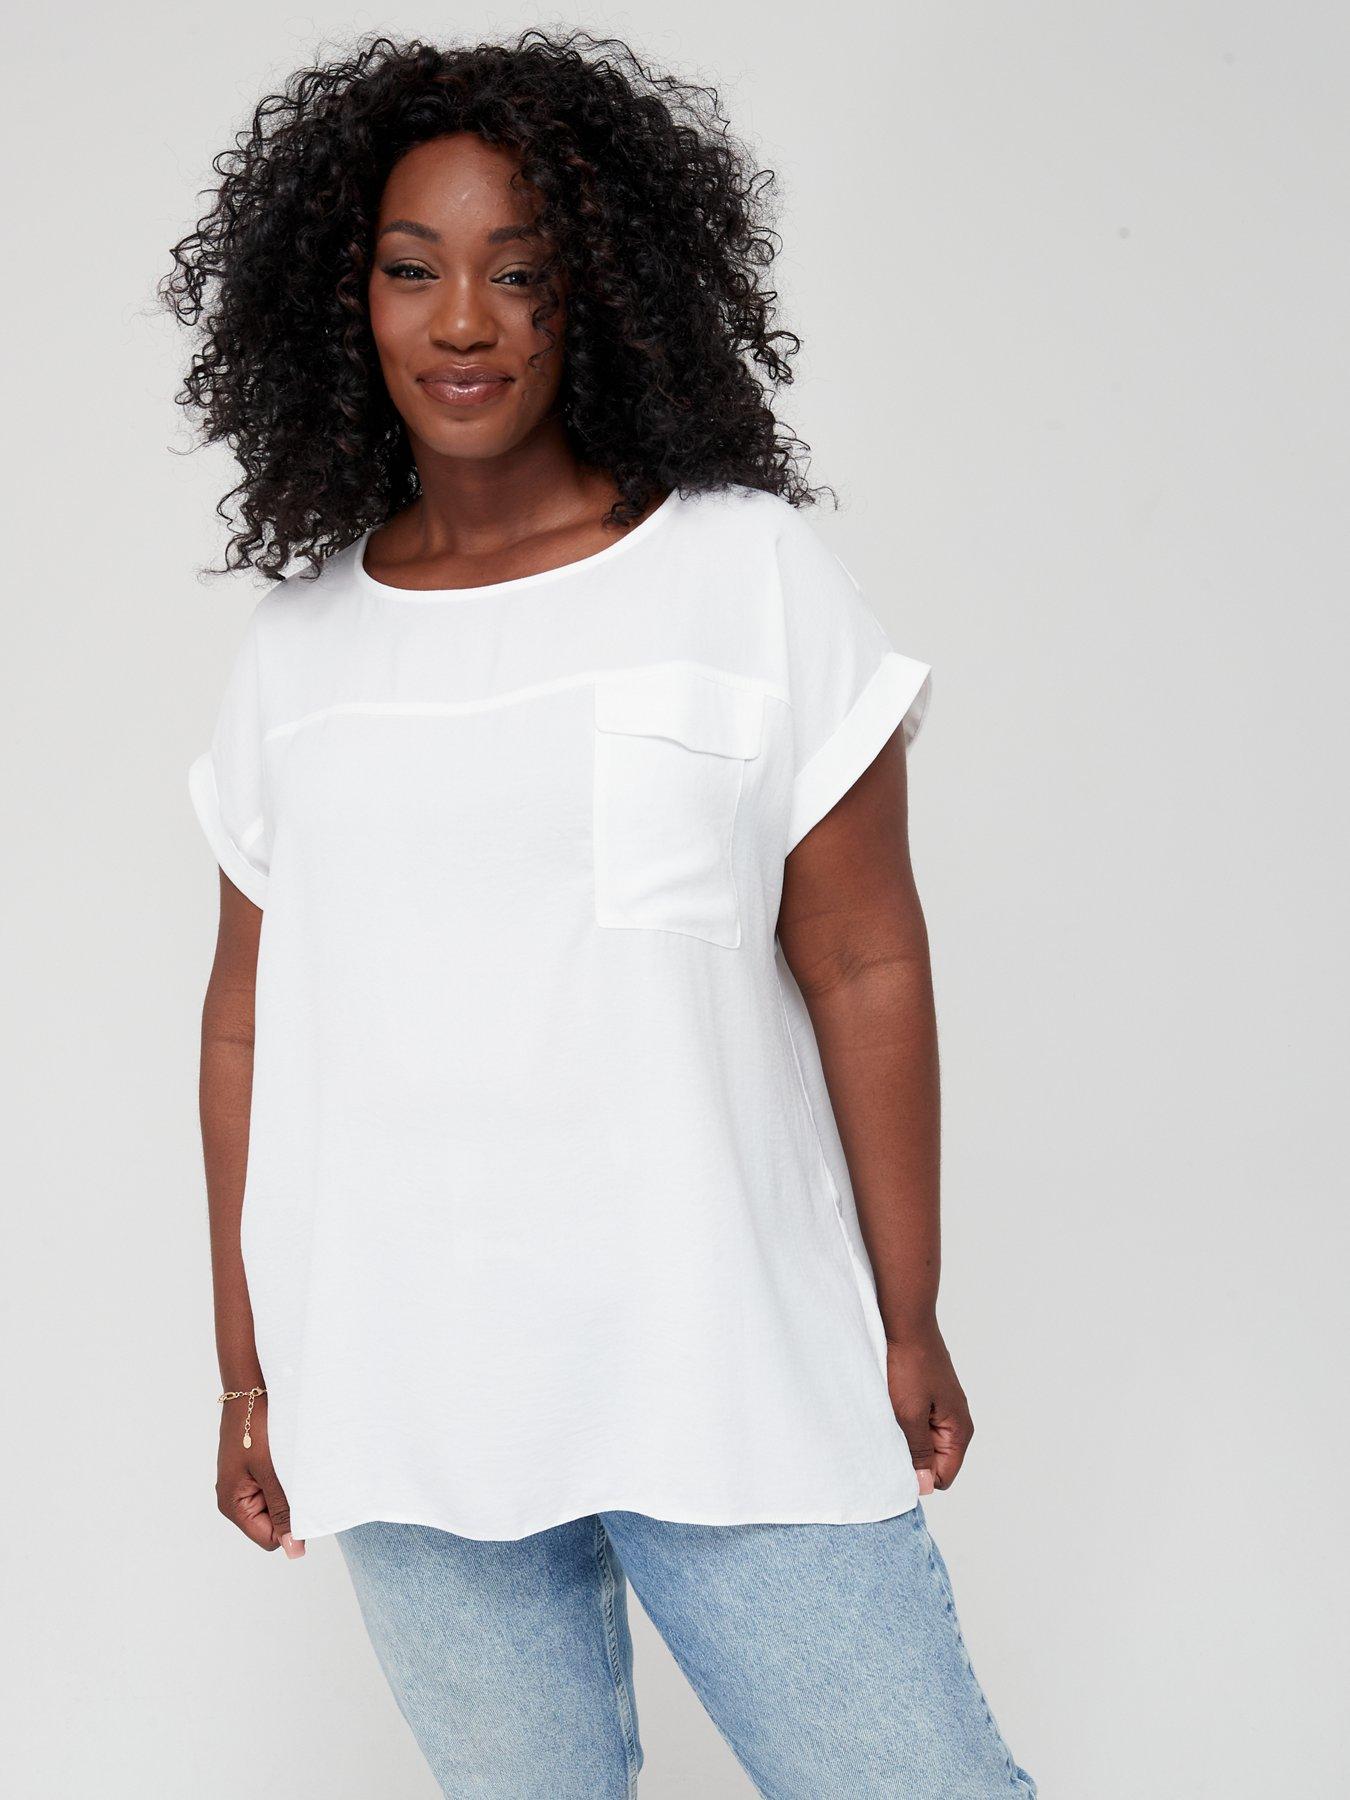 WOMEN FASHION Shirts & T-shirts Ribbed Deeply T-shirt White S discount 92% 